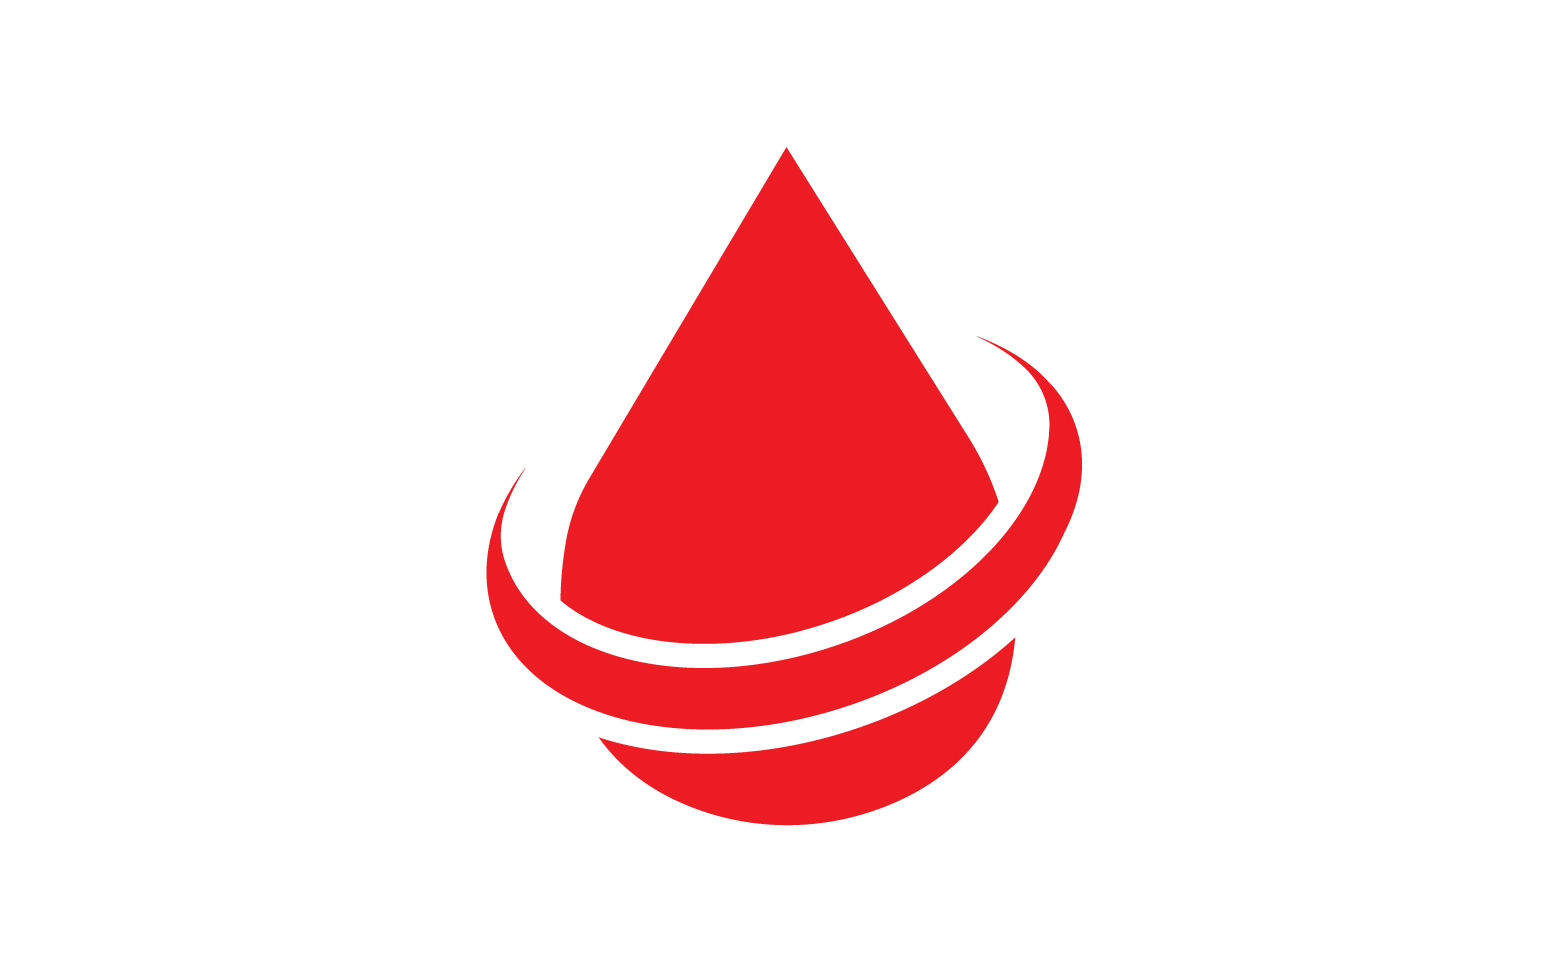 Blood drop icon logo vector element  v8